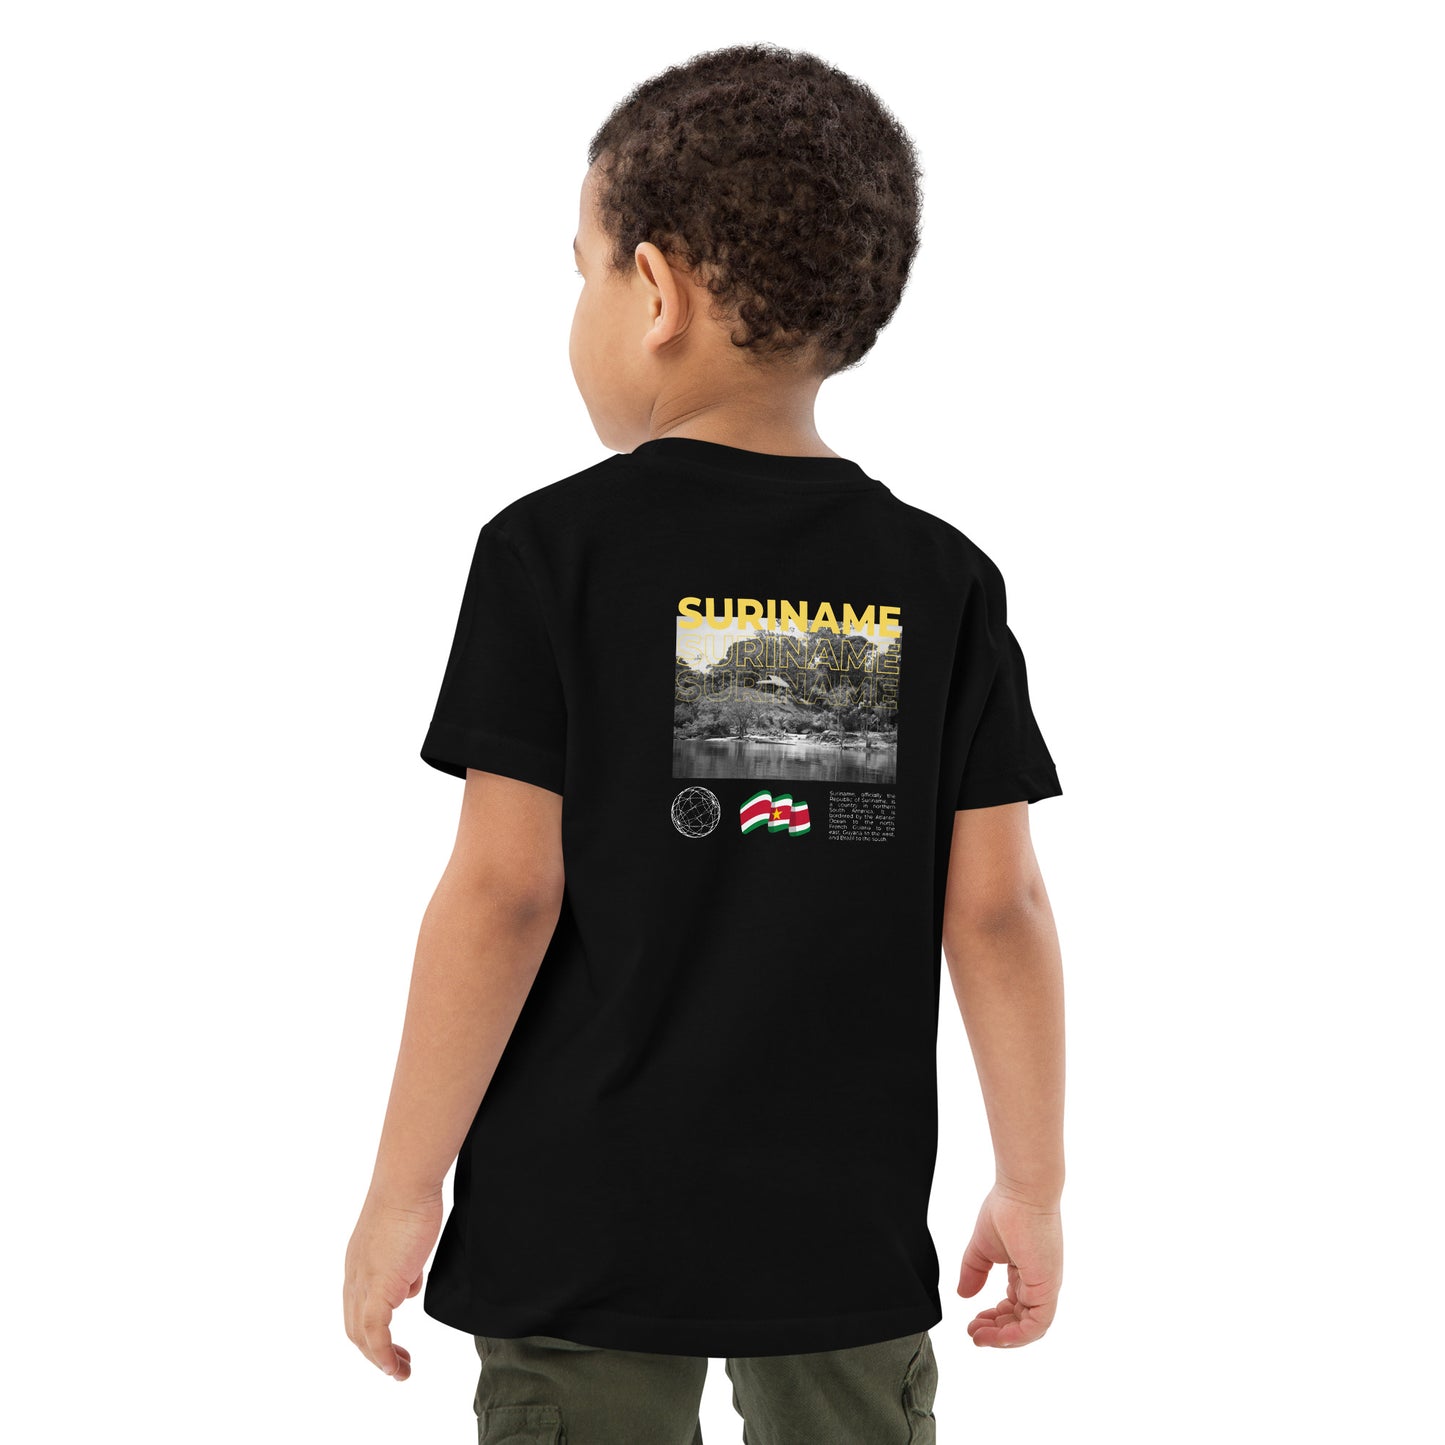 Suriname - T-shirt